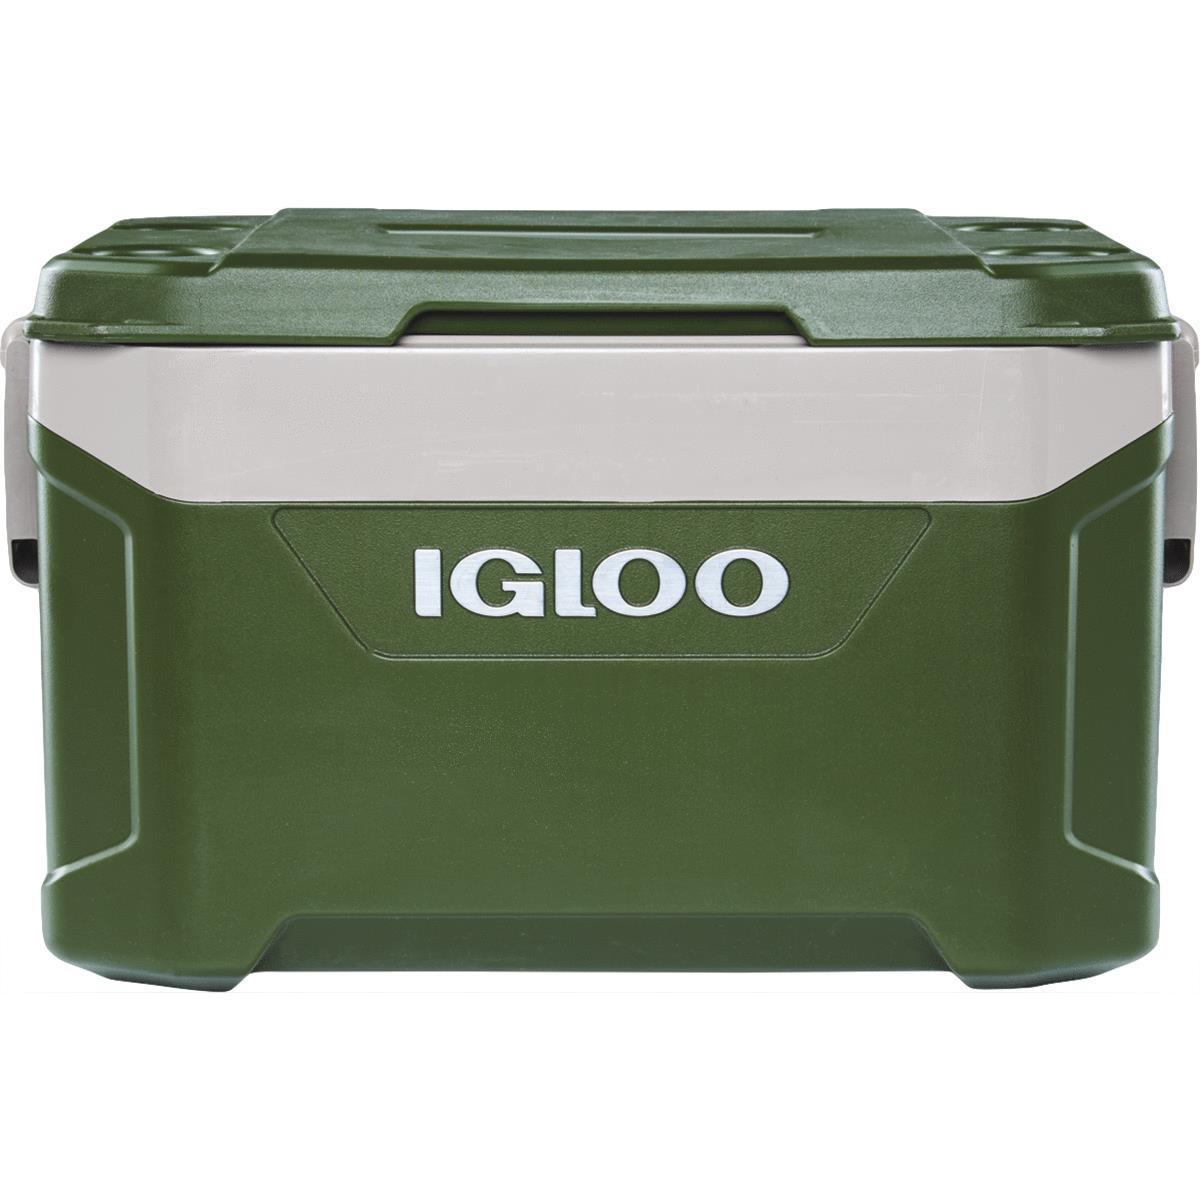 igloo sportsman ice chest